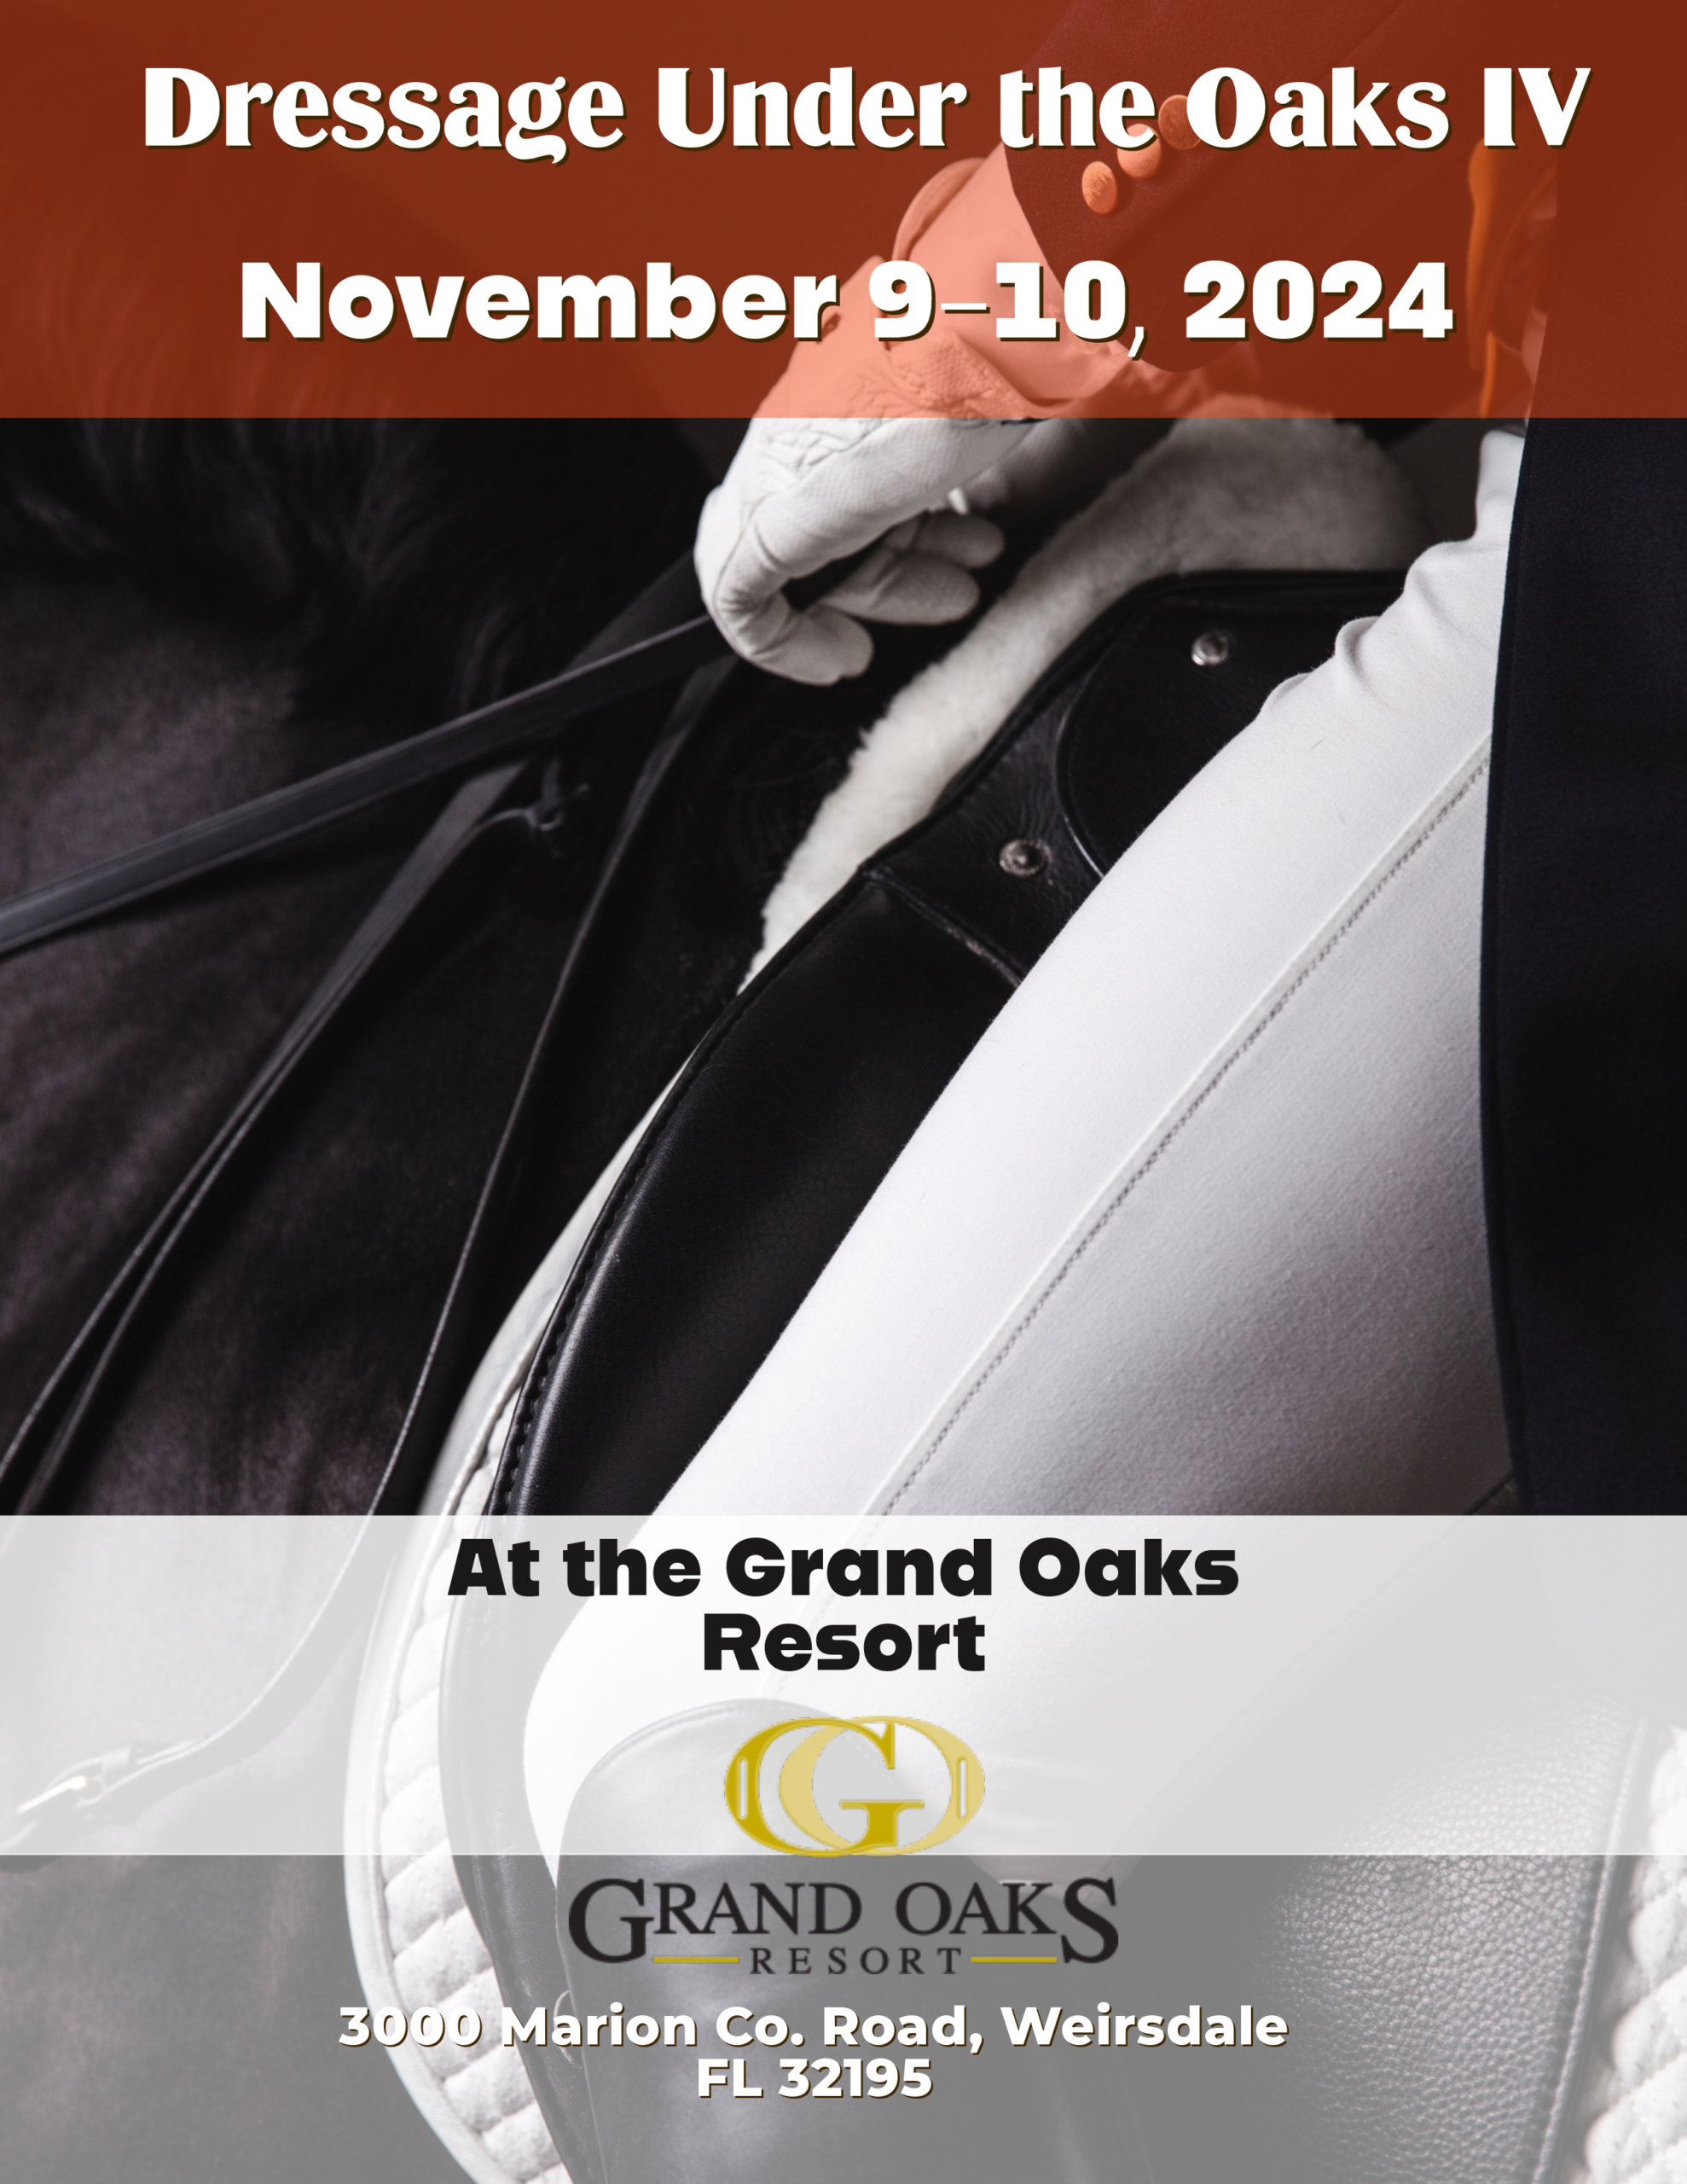 Orlando Dressage Show at the Grand Oaks Resort